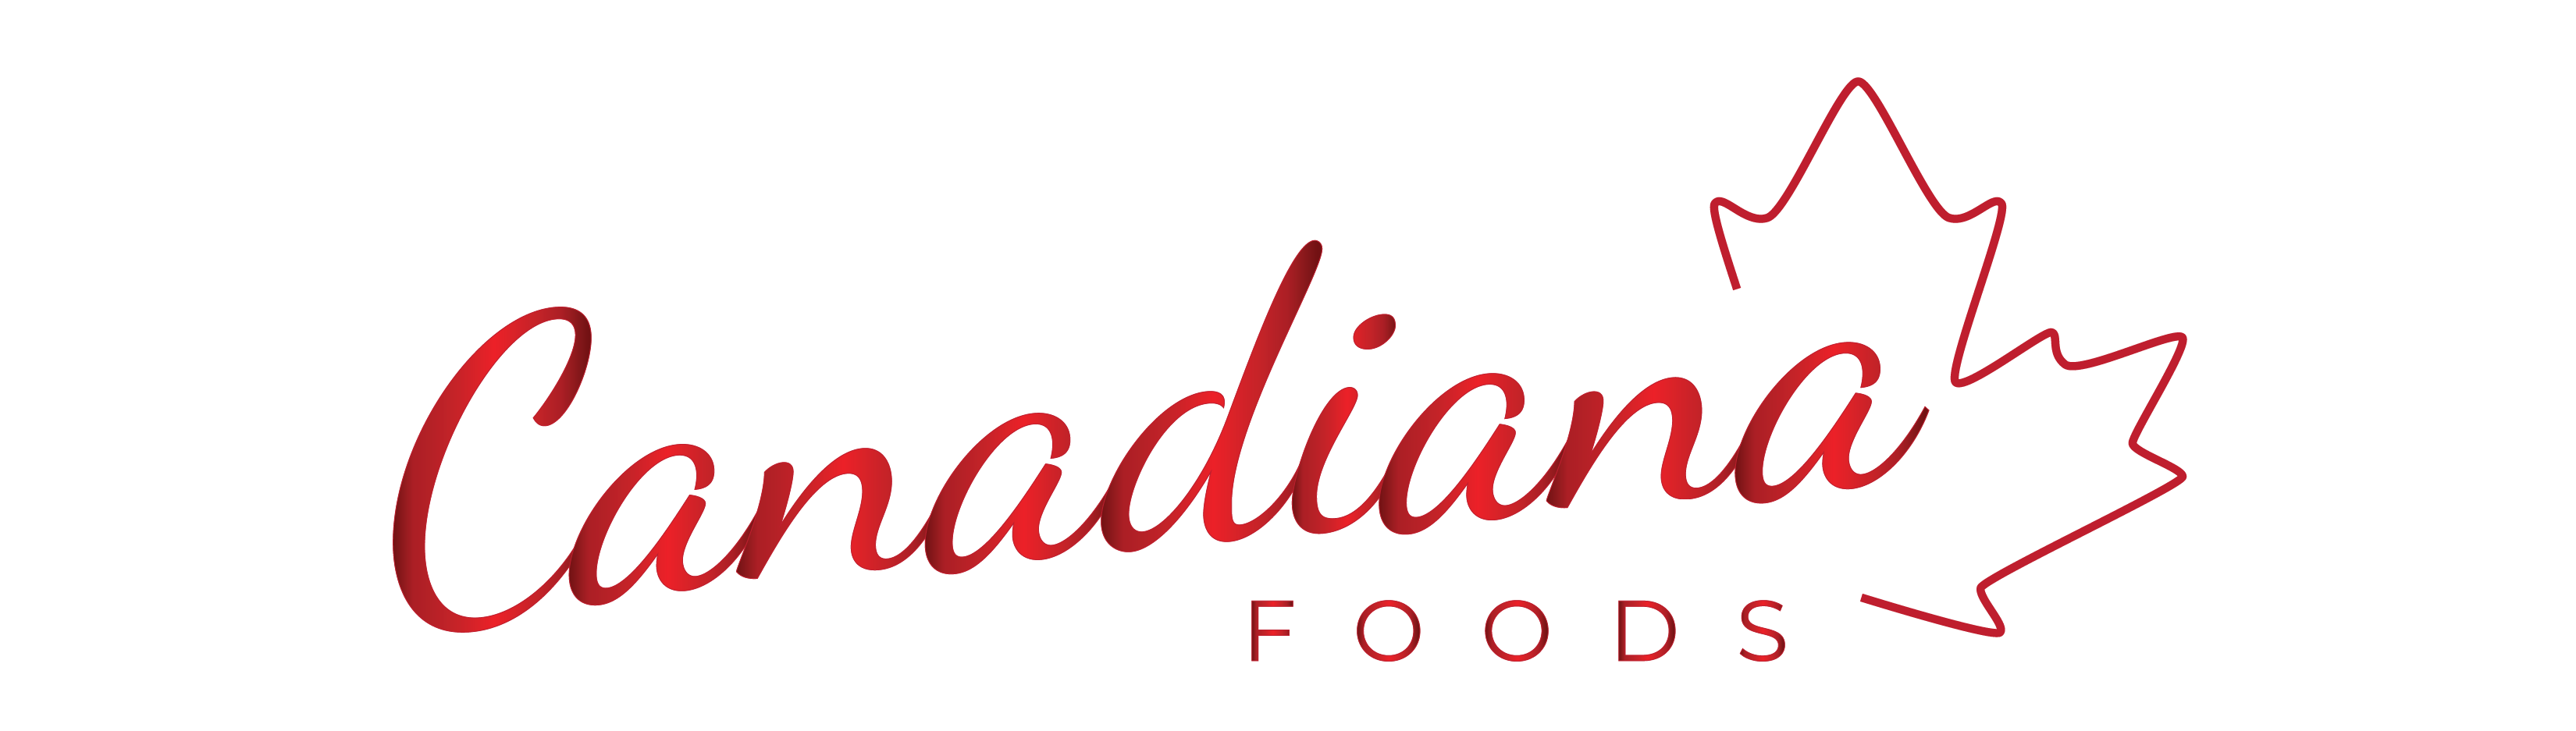 Canadiana Foods